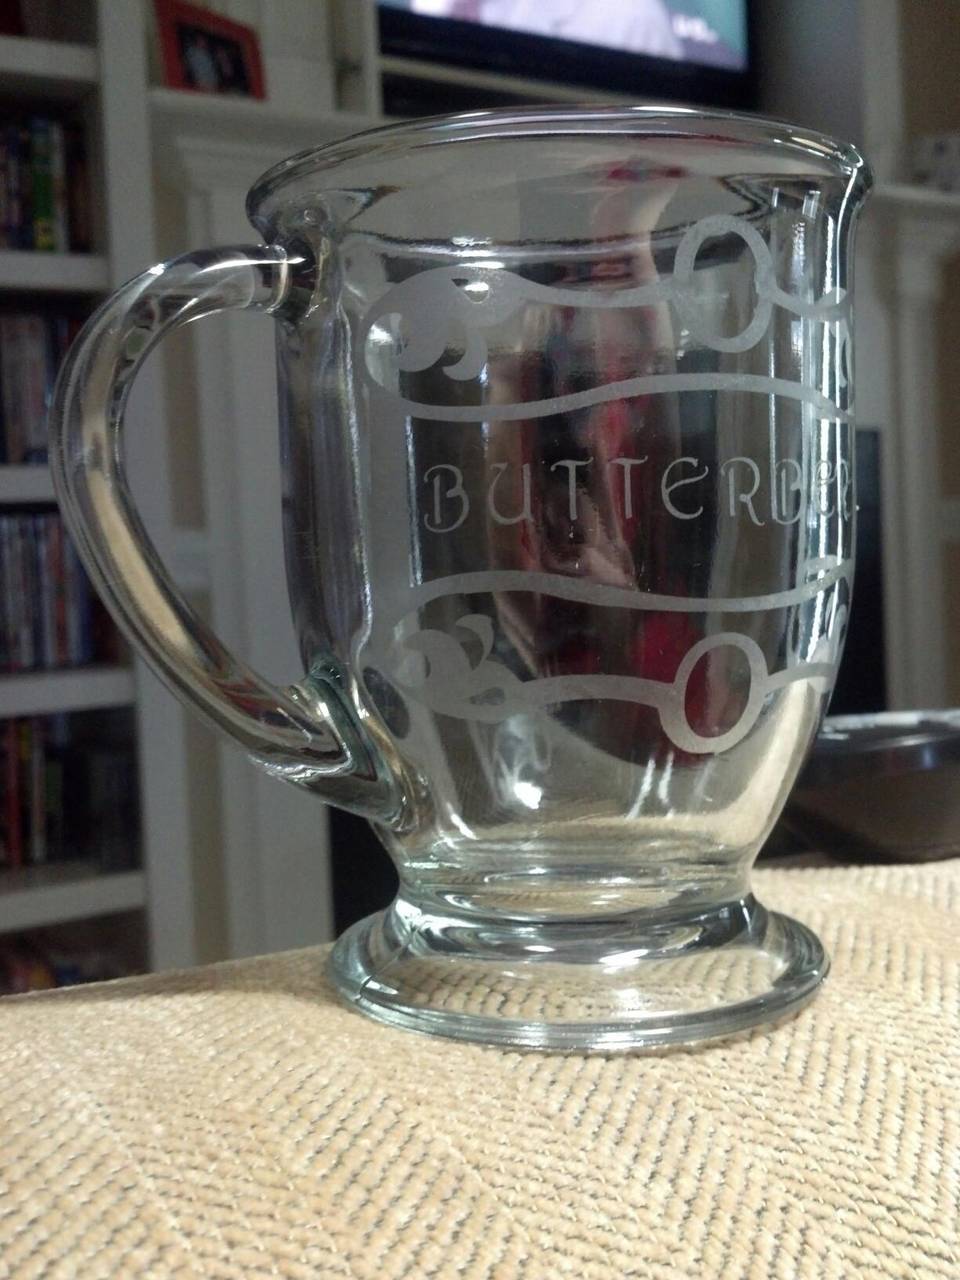 Butterbeer Mug!